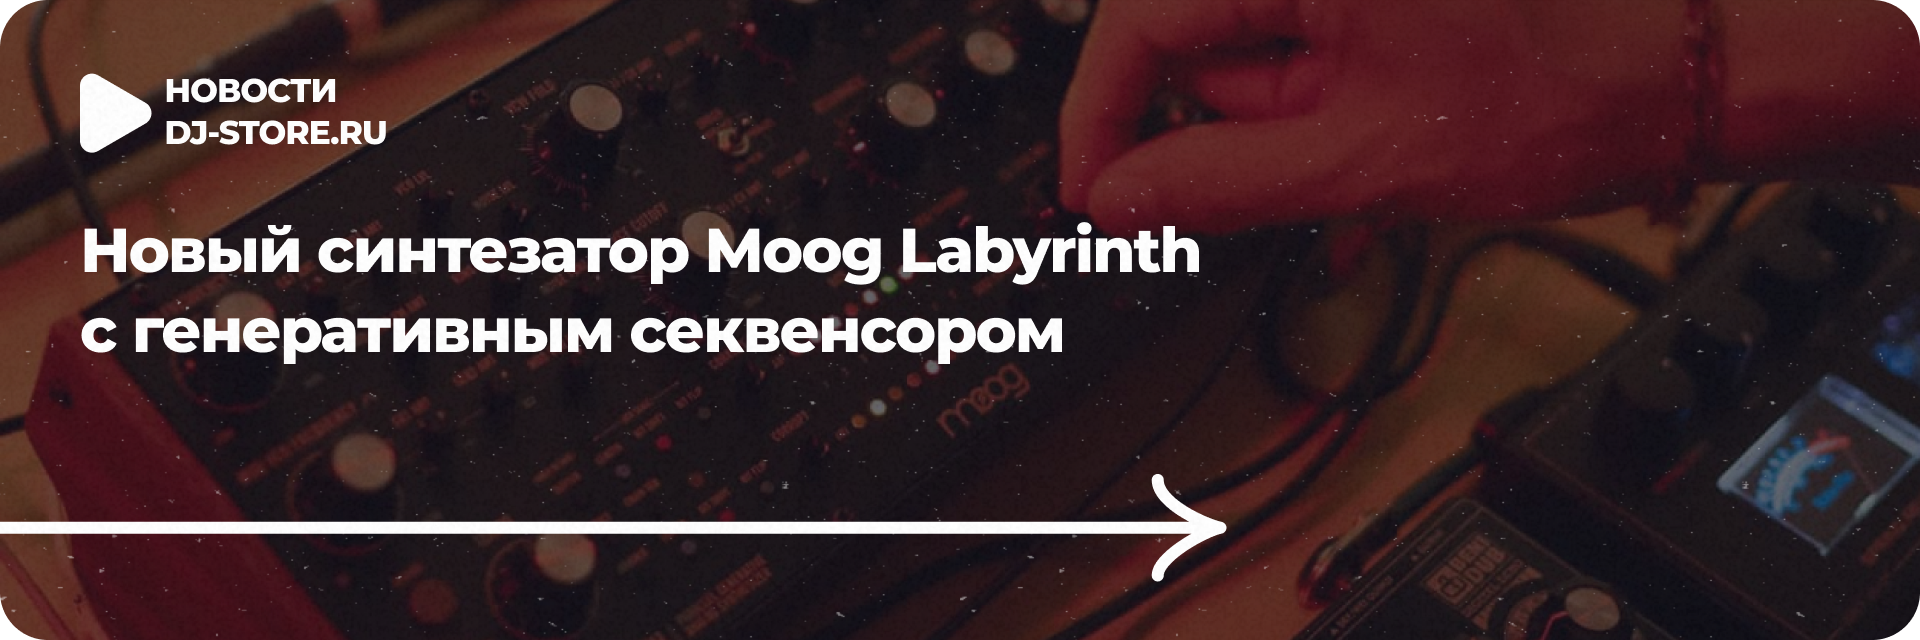 Moog Labyrinth